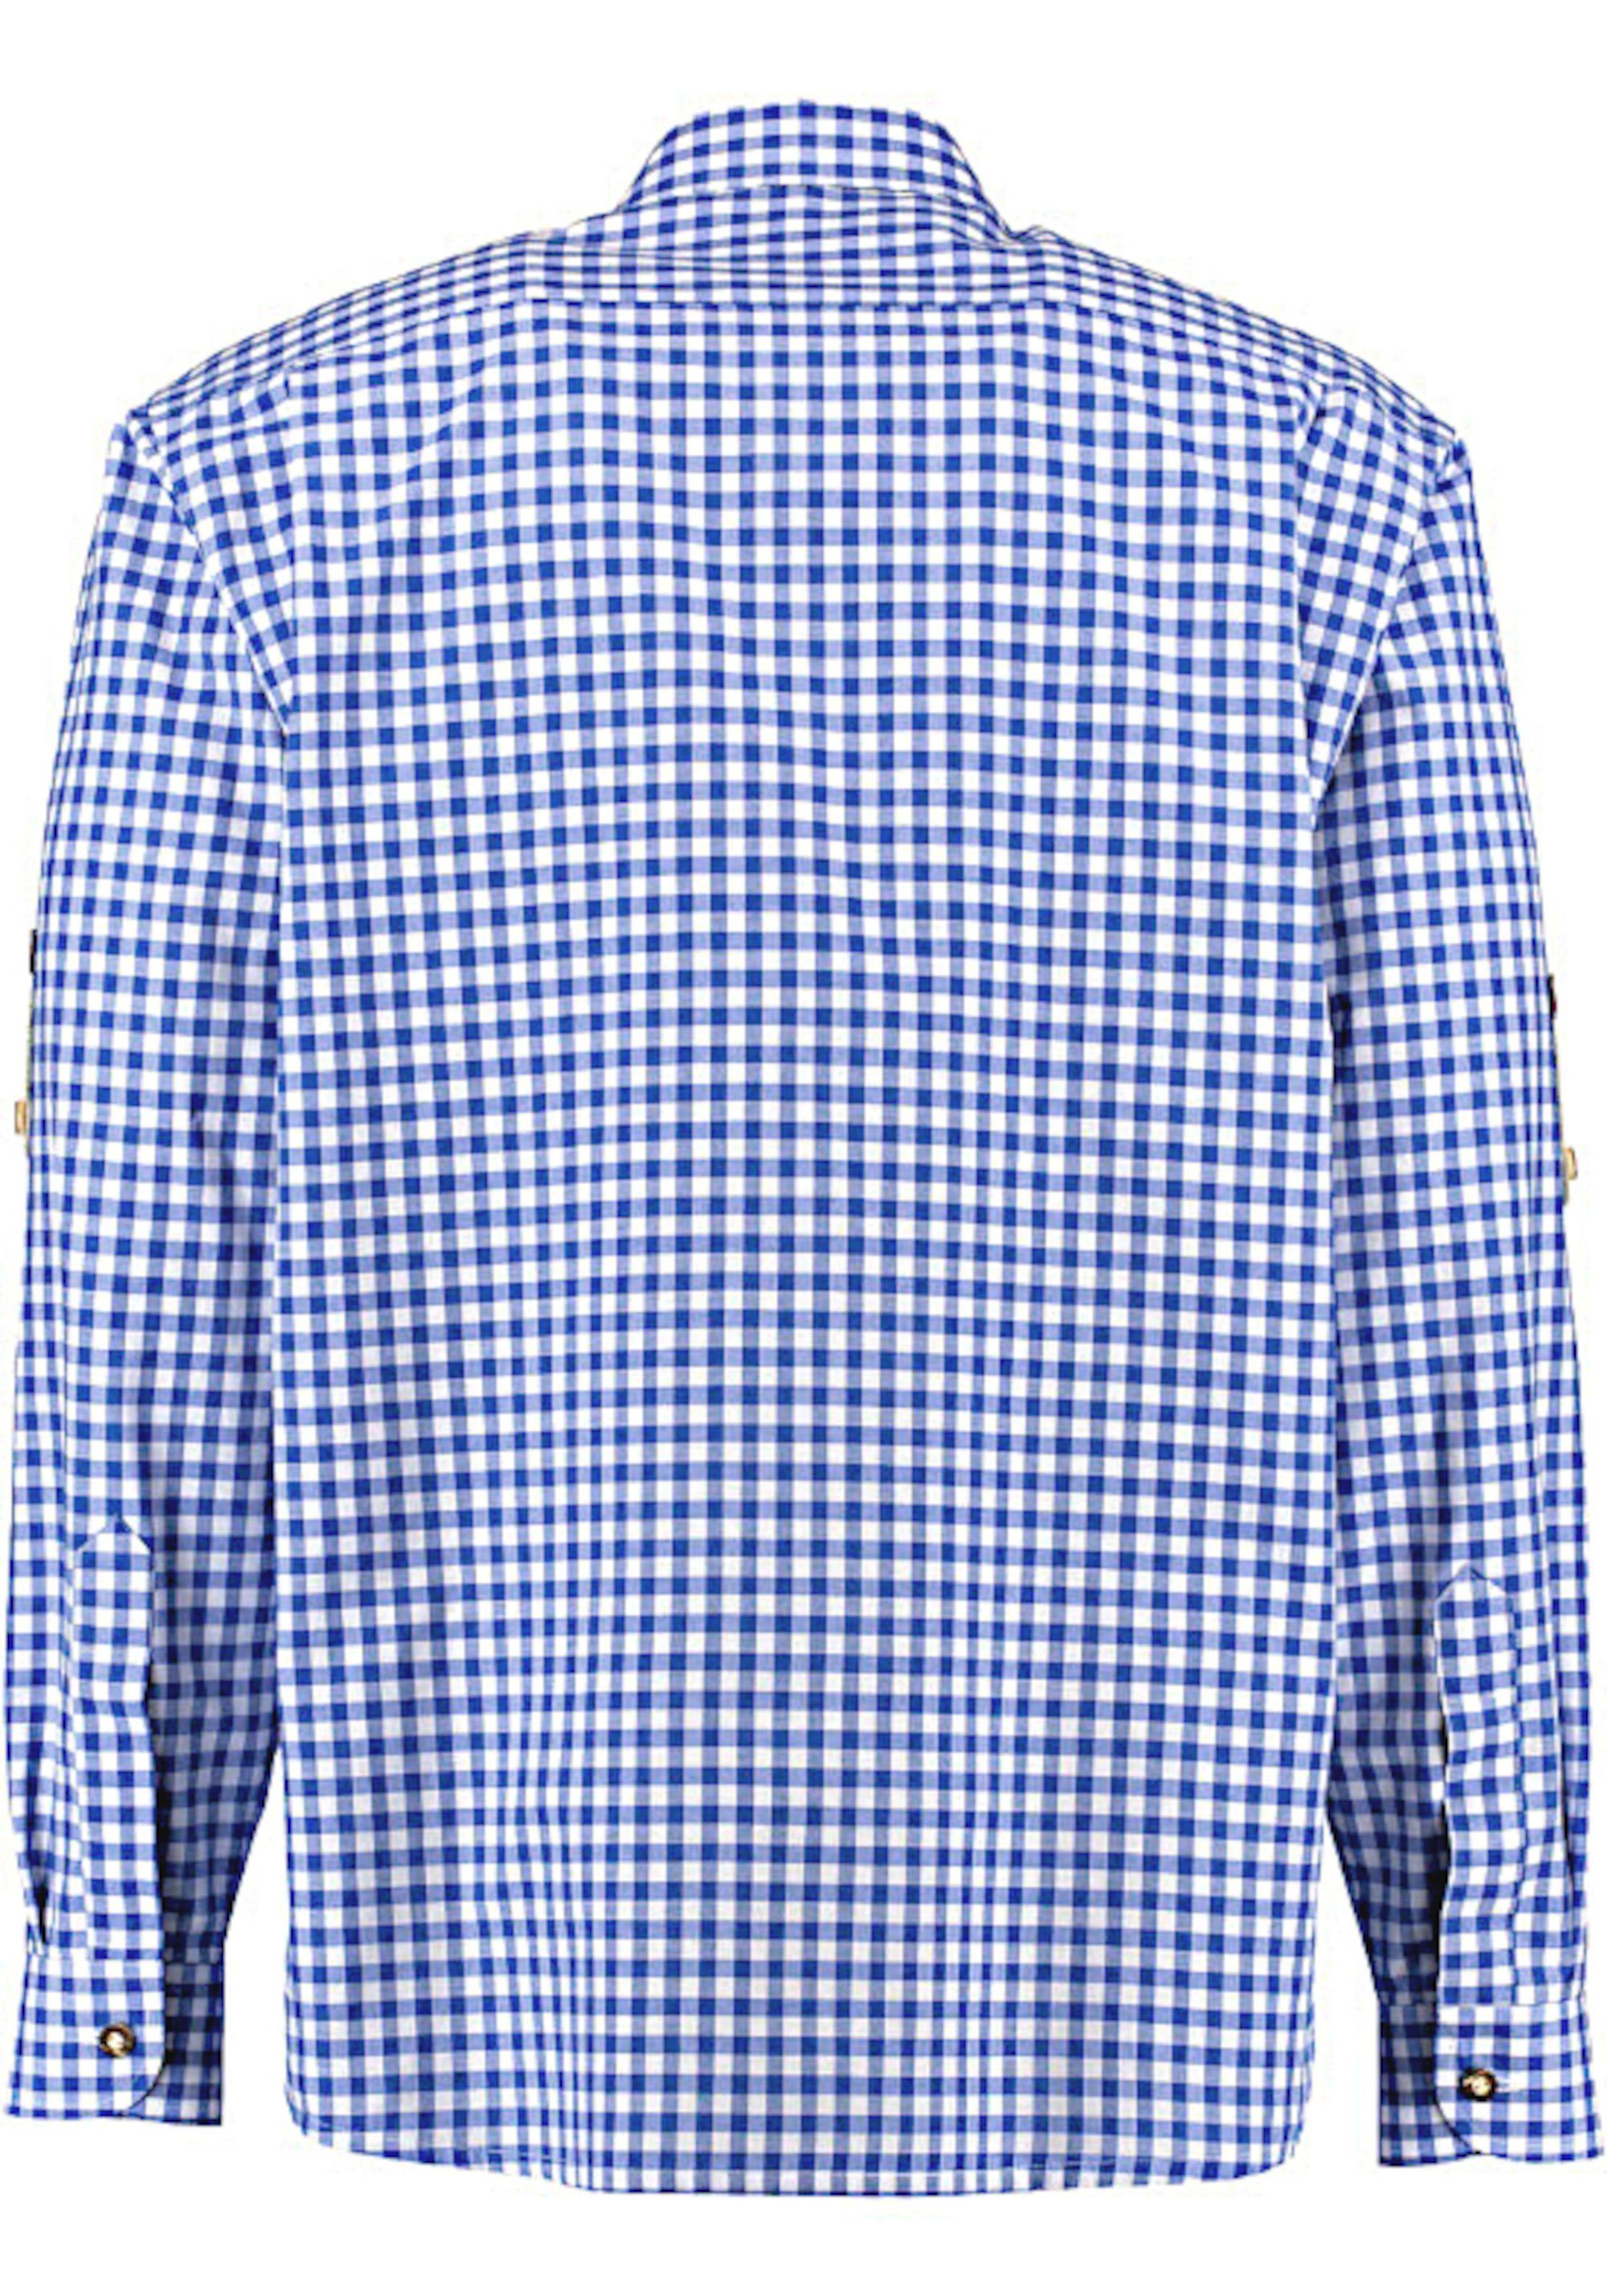 OS-Trachten Trachtenhemd TH-0251 gerader blau Kentkragen, Stickerei Regular Krempelarm Schnitt Fit-bequemer